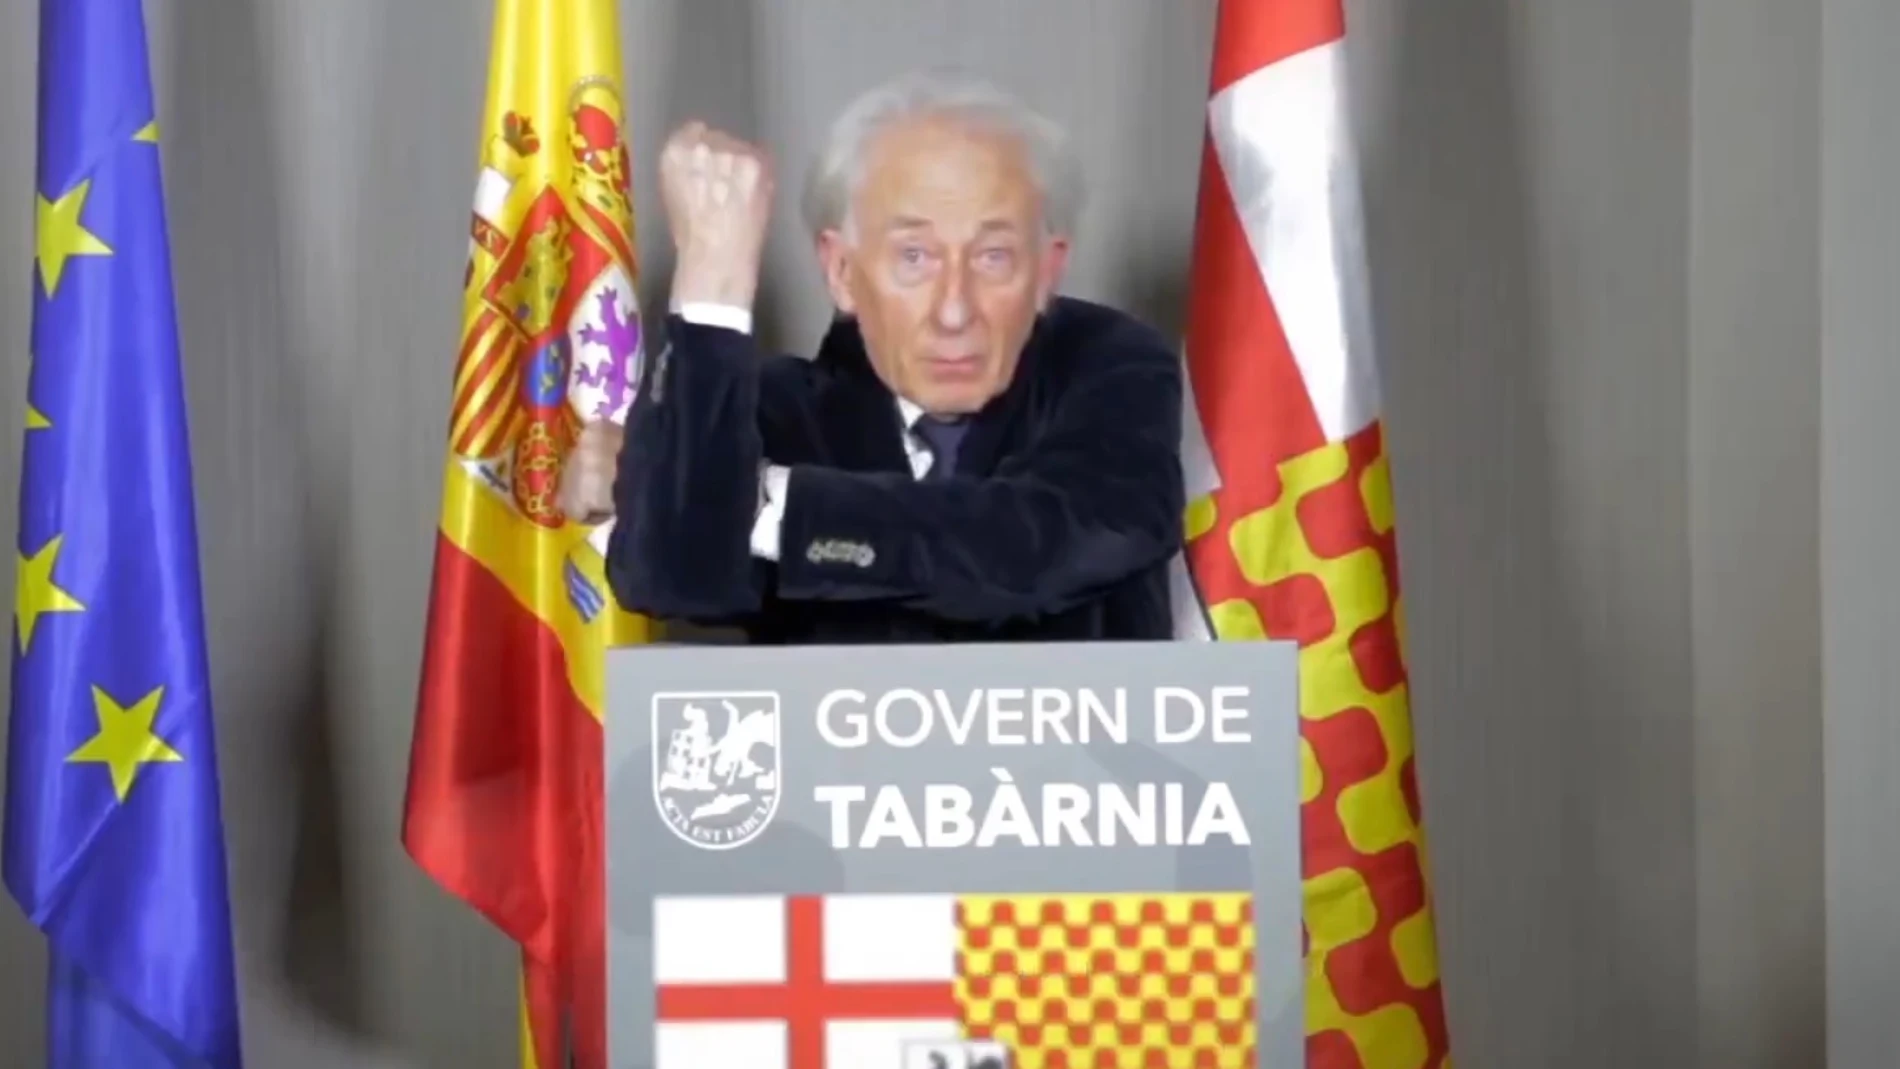 Albert Boadella, presidente ficticio de Tabarnia